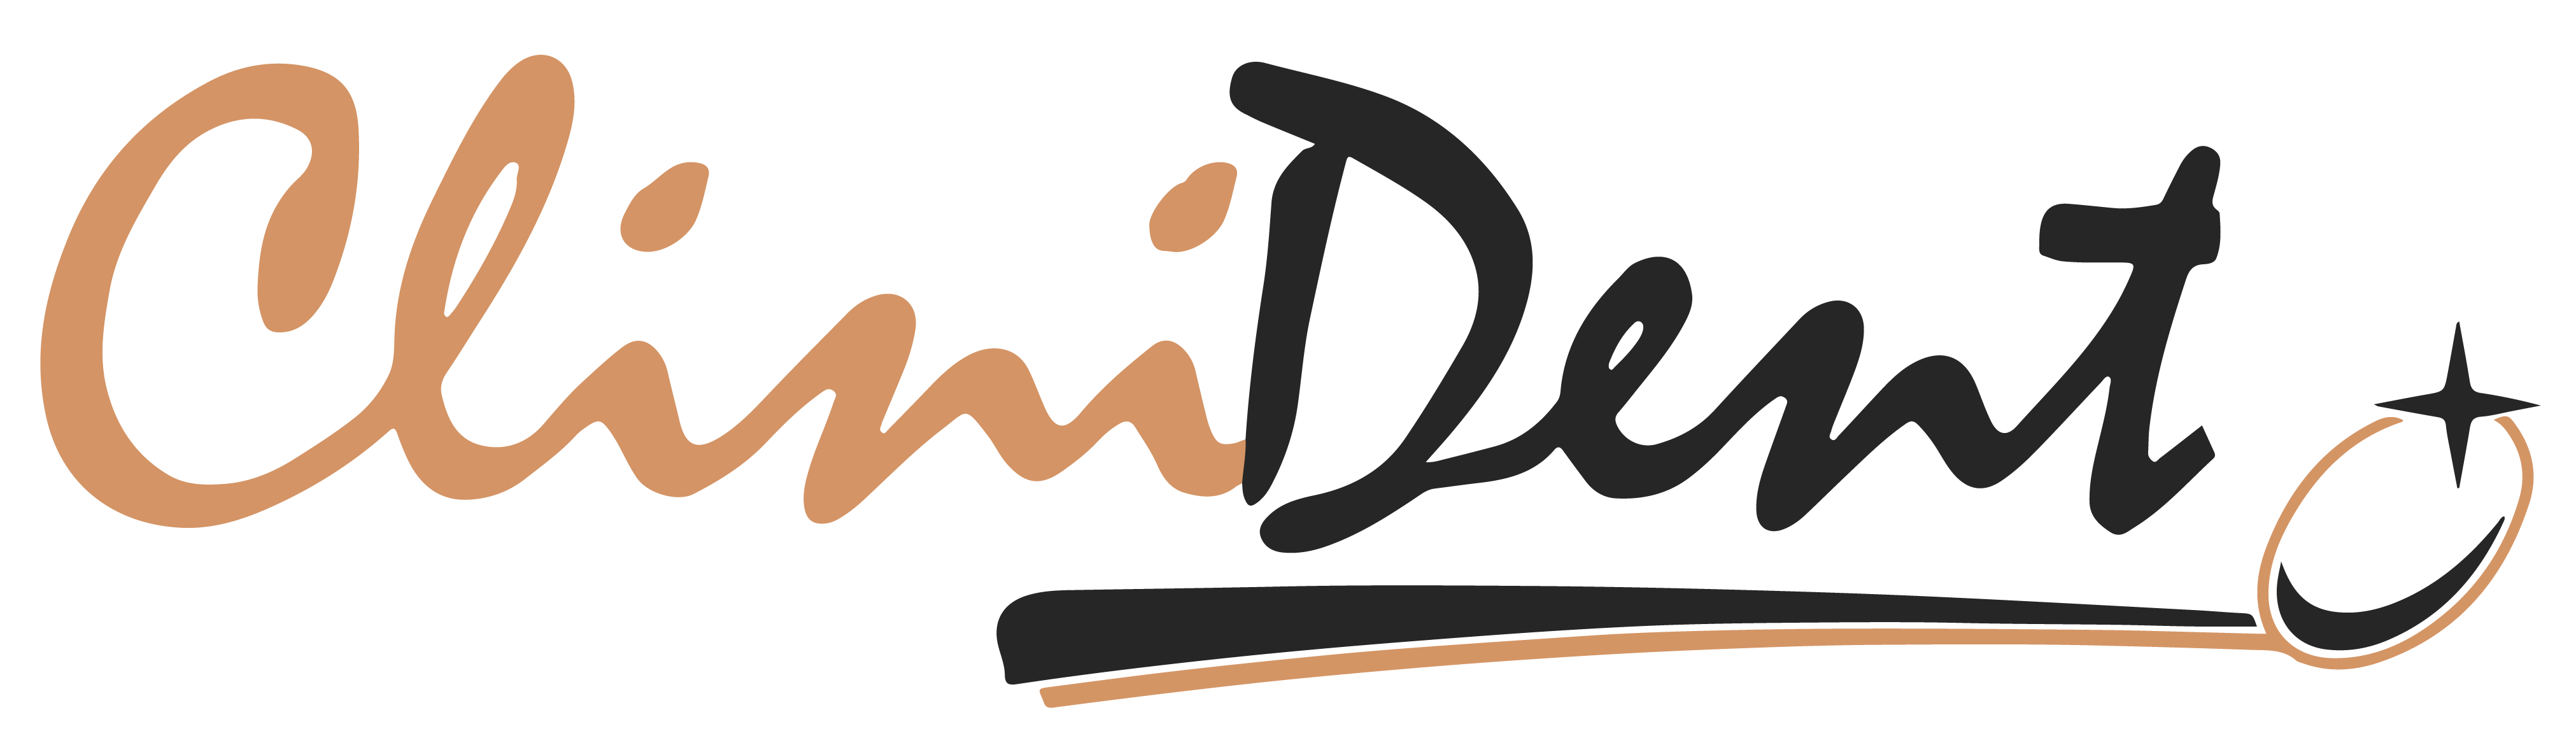 Logo Clinident